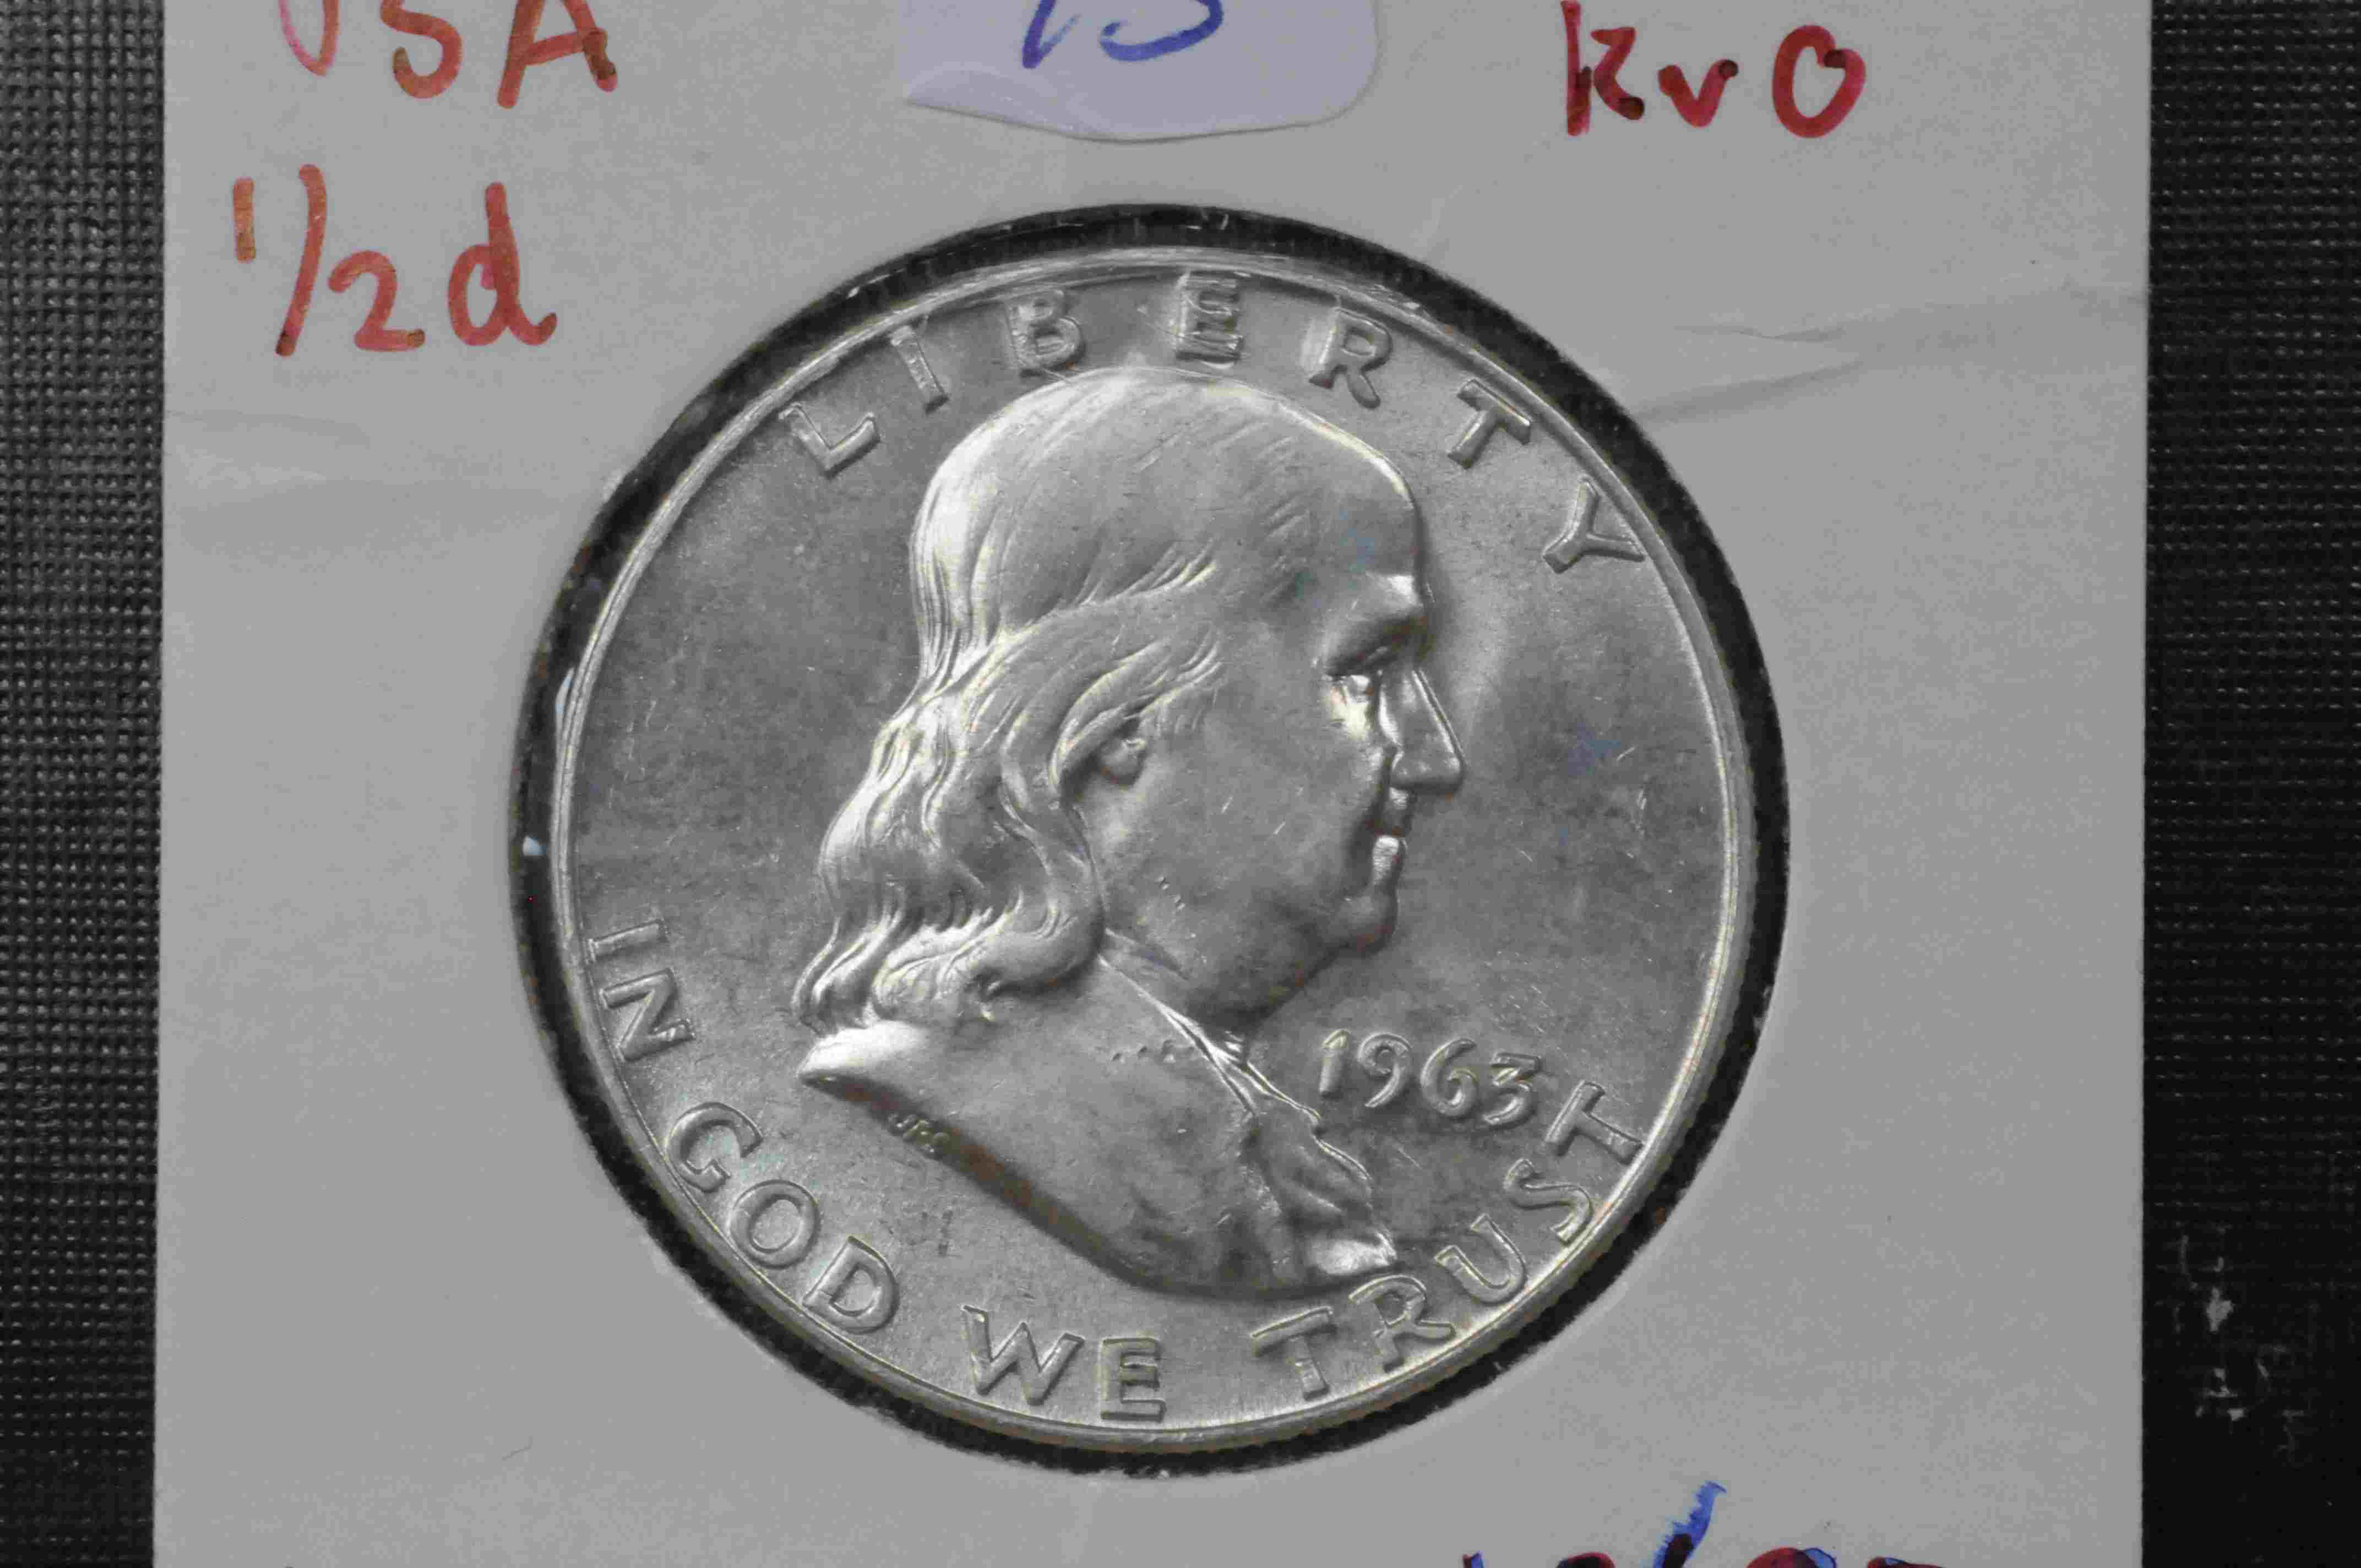 1/2 dollar kv0  1963D